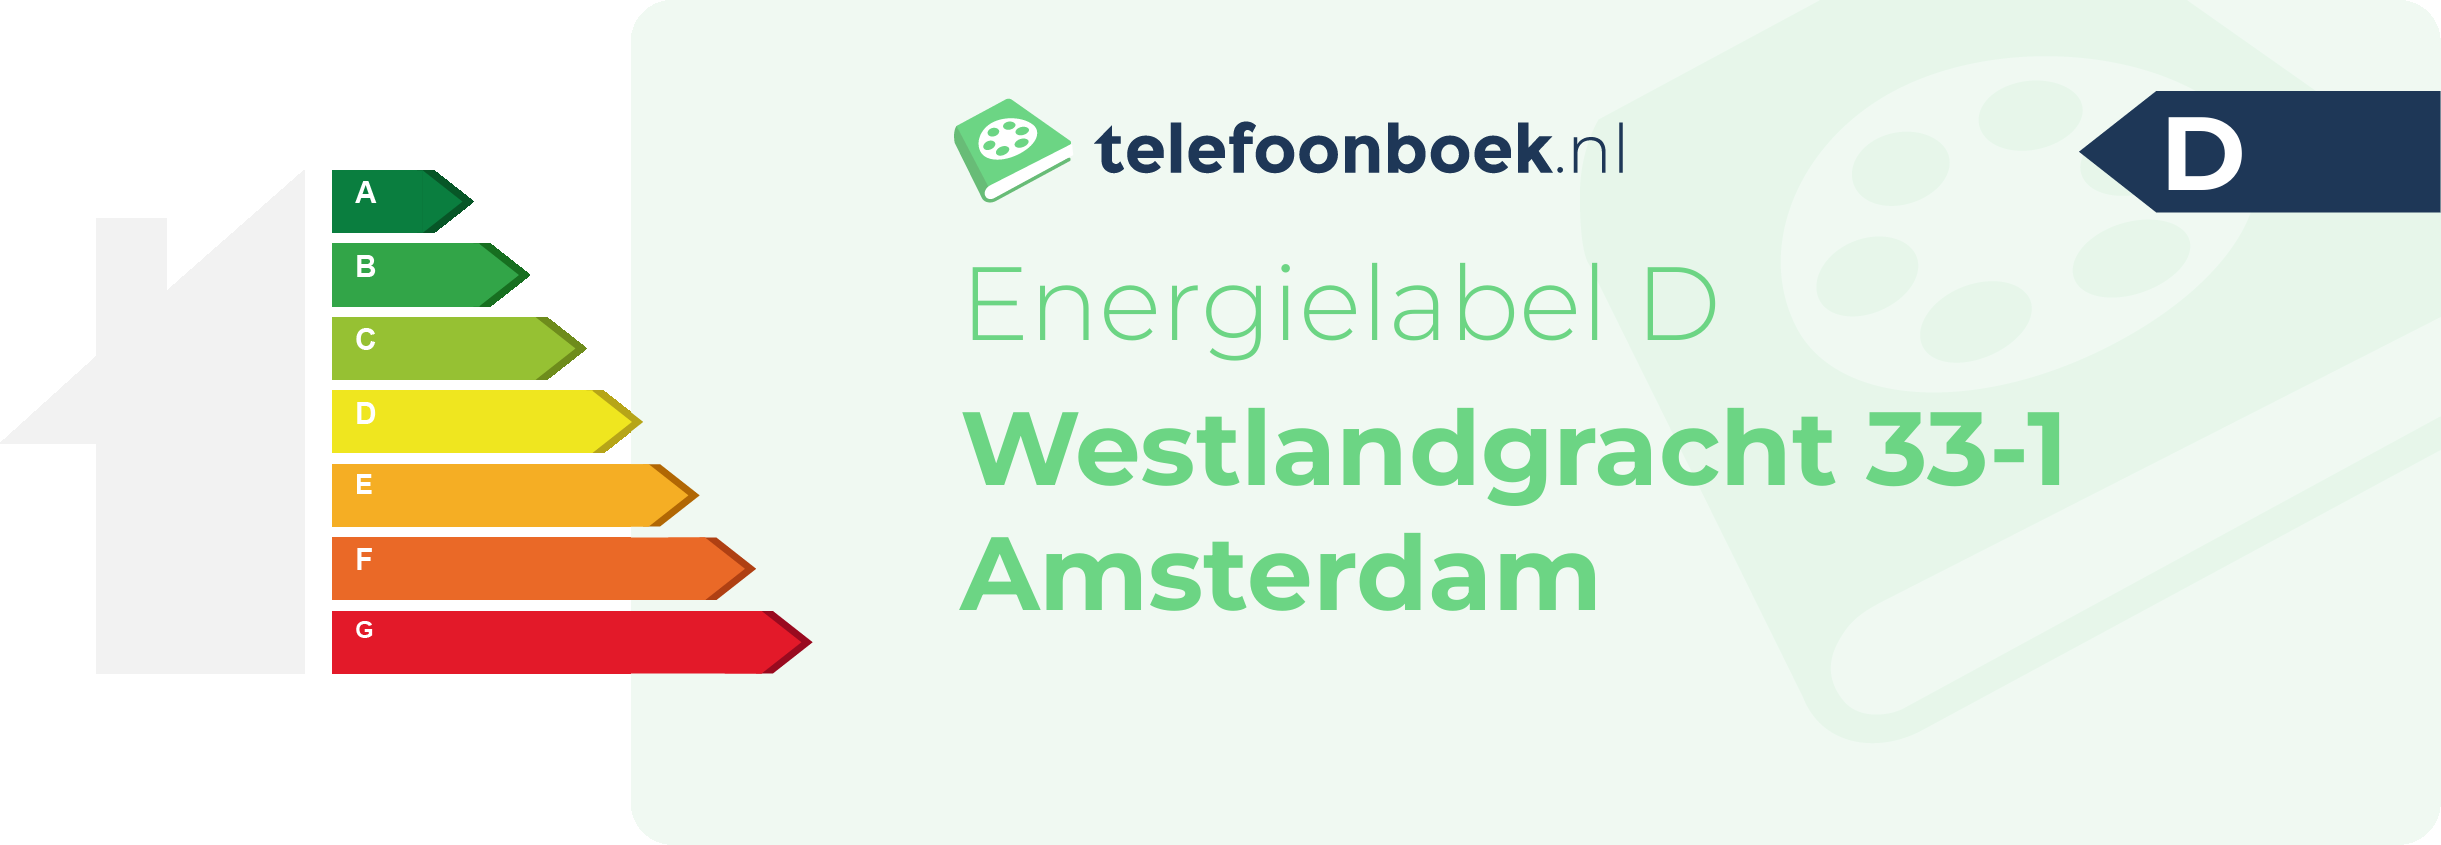 Energielabel Westlandgracht 33-1 Amsterdam